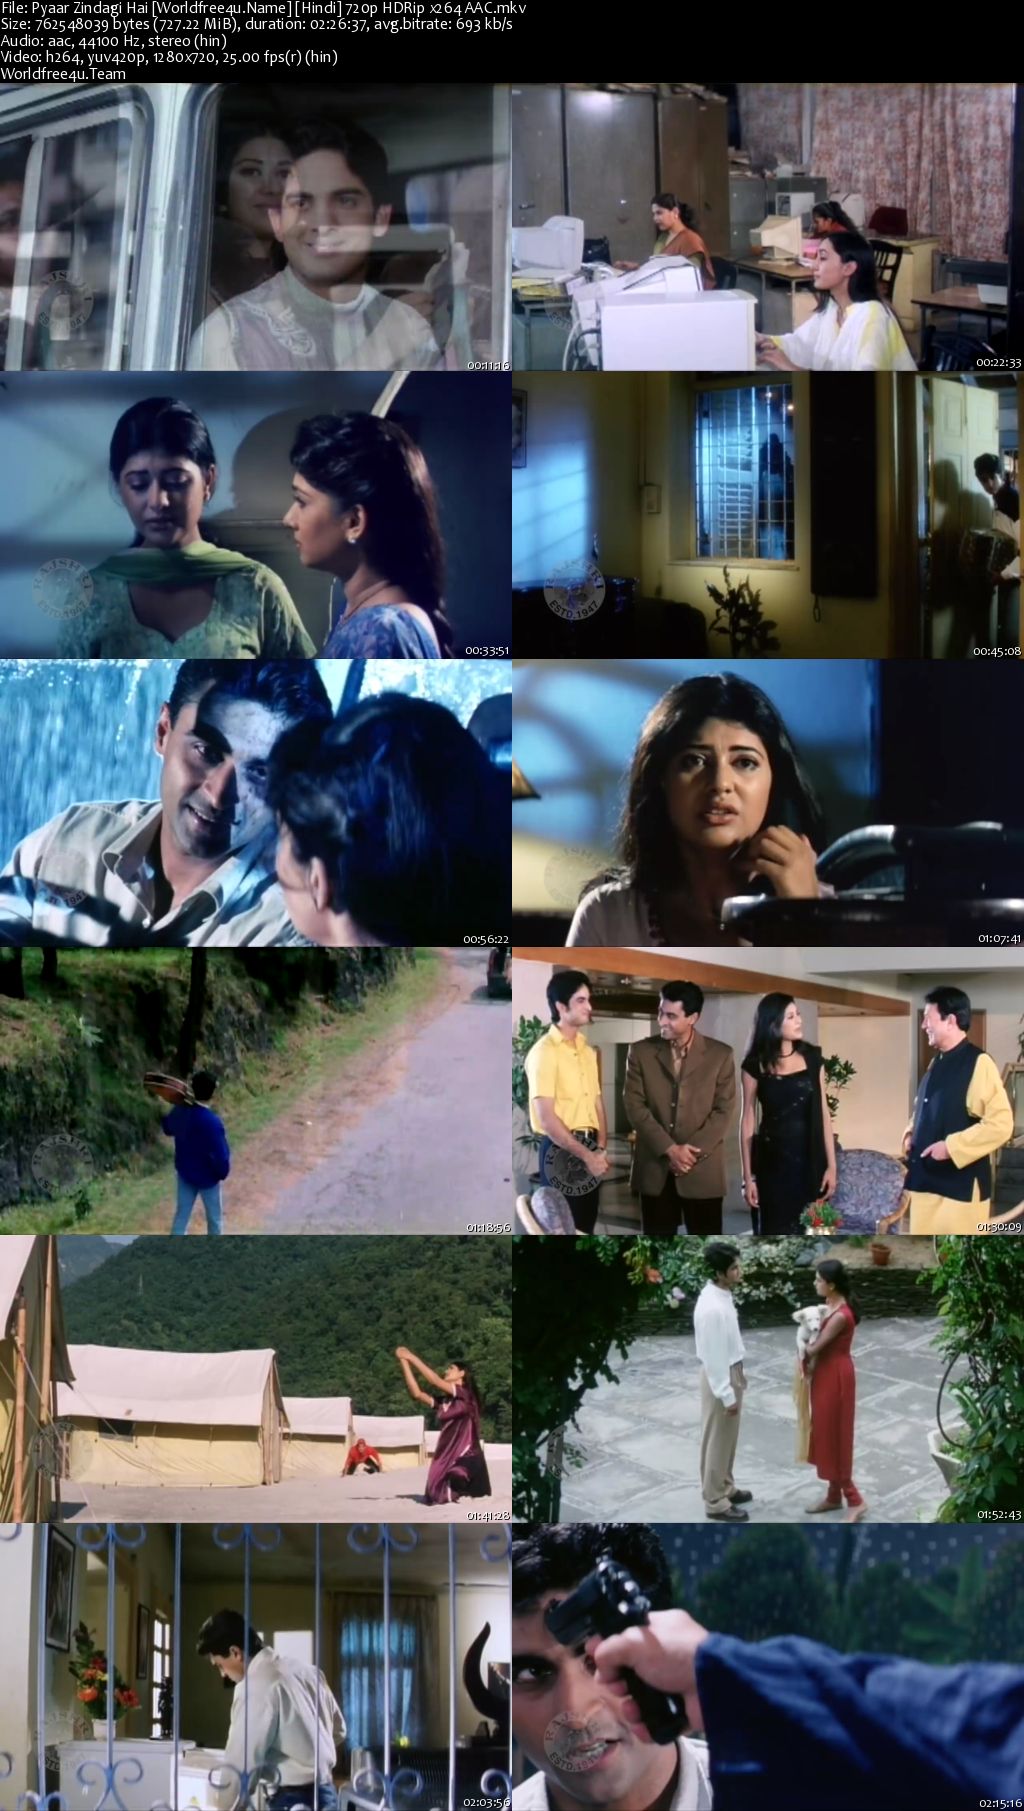 Pyaar Zindagi Hai 2001 Hindi Movie Download || HDRip 720p